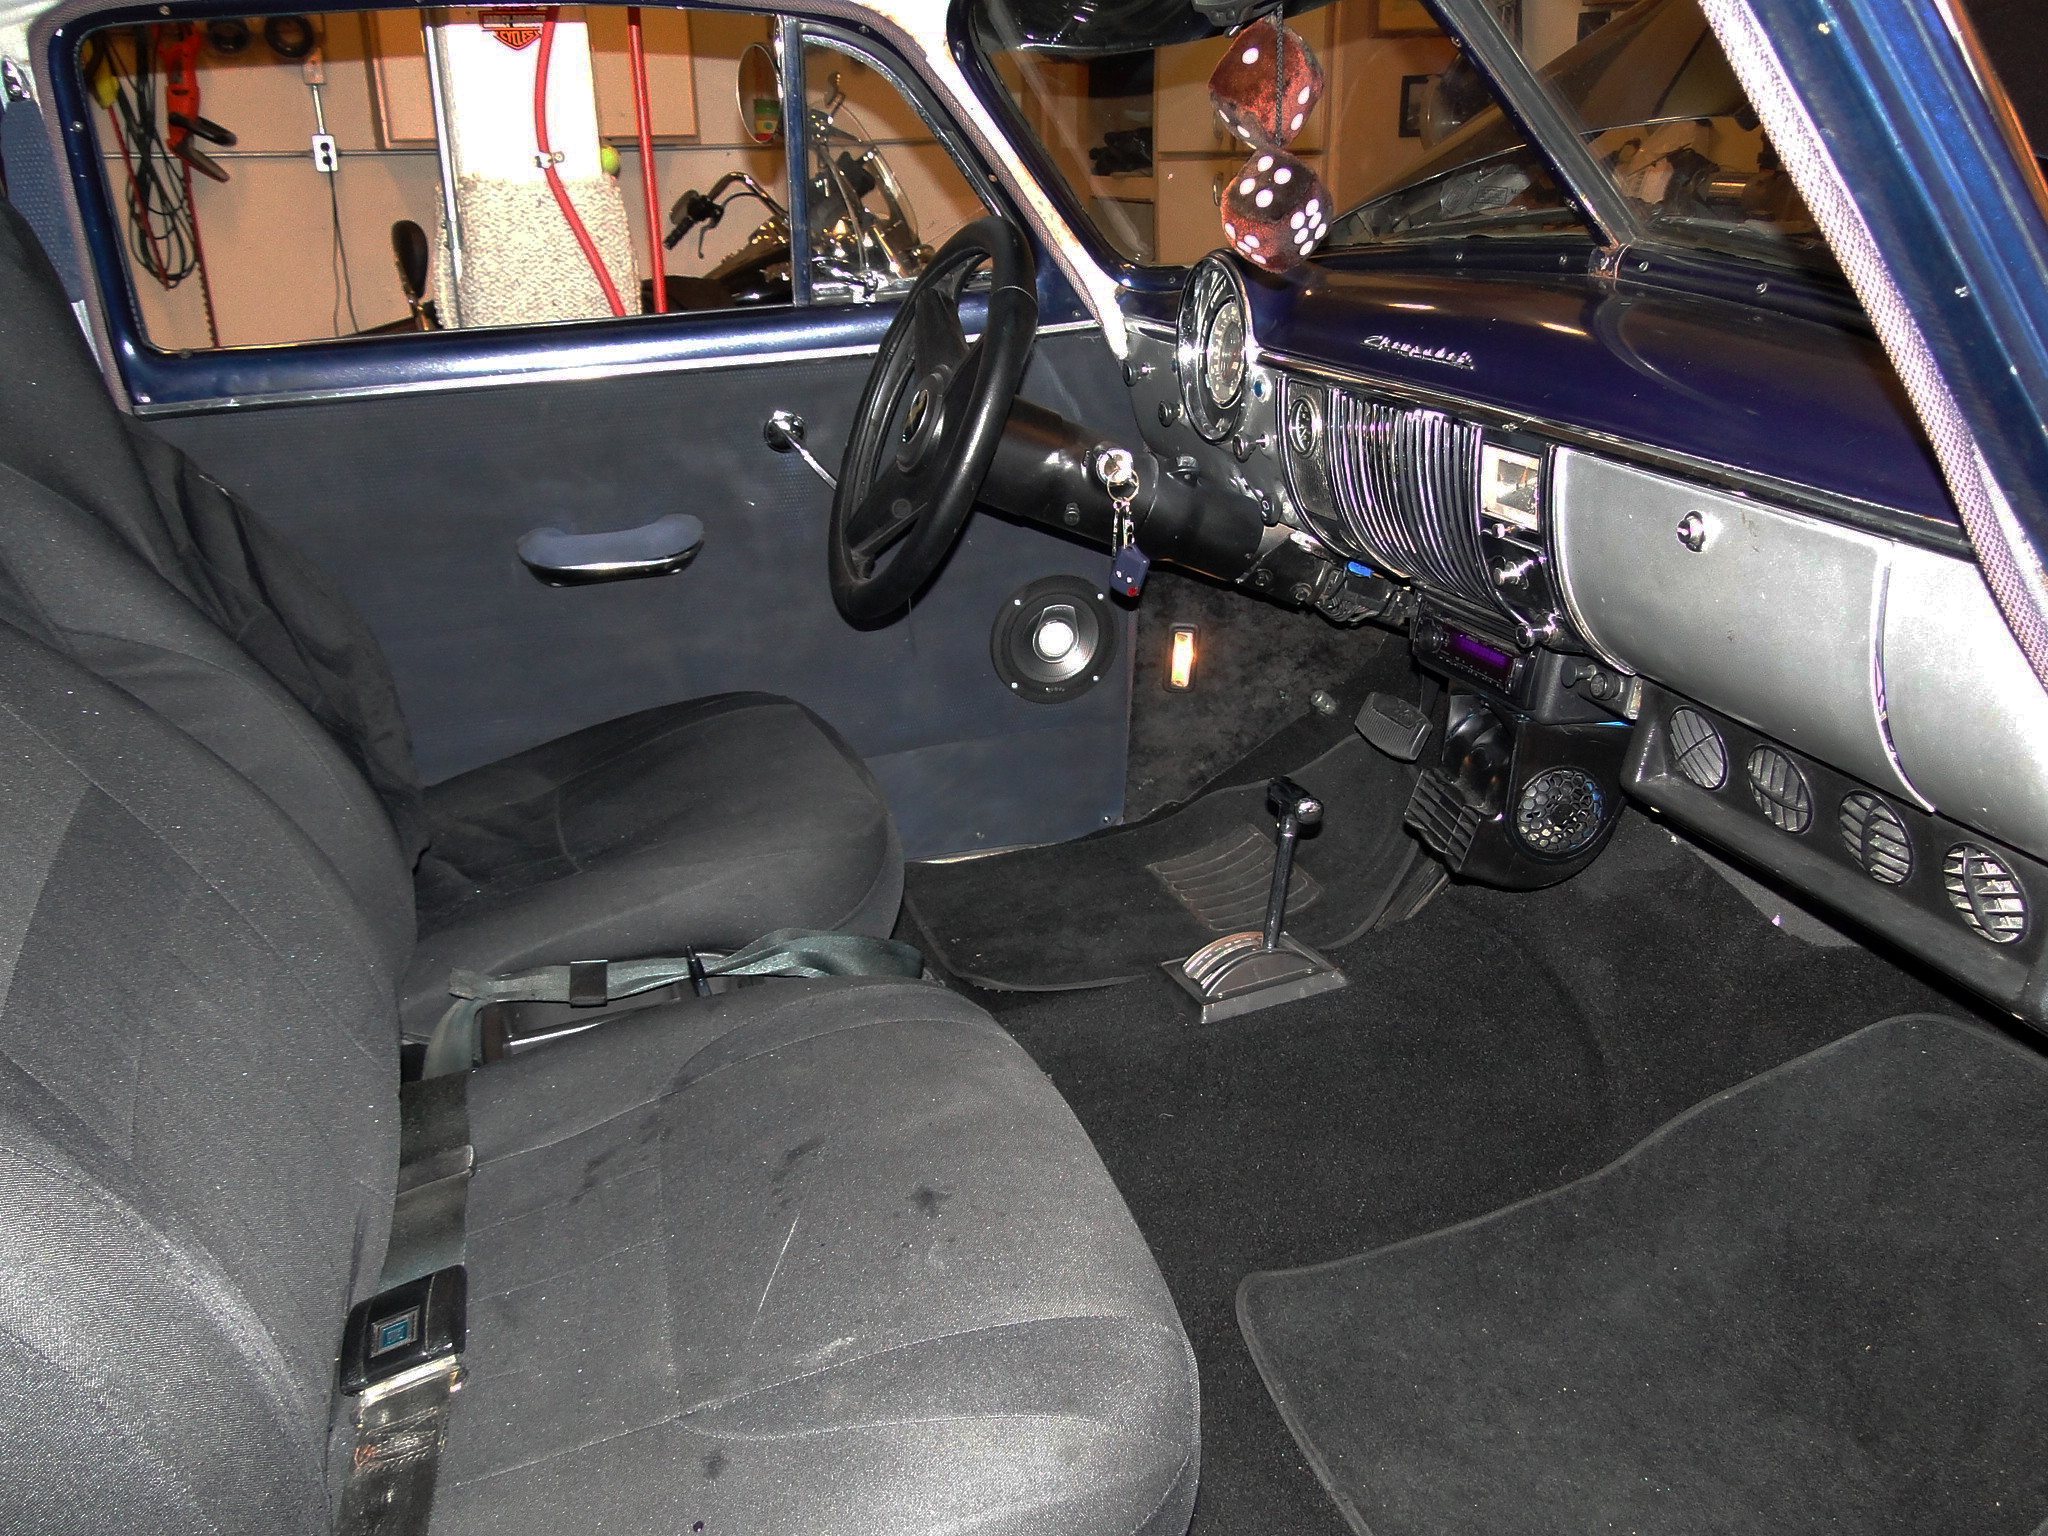 1950 Chevy Fleetline interior